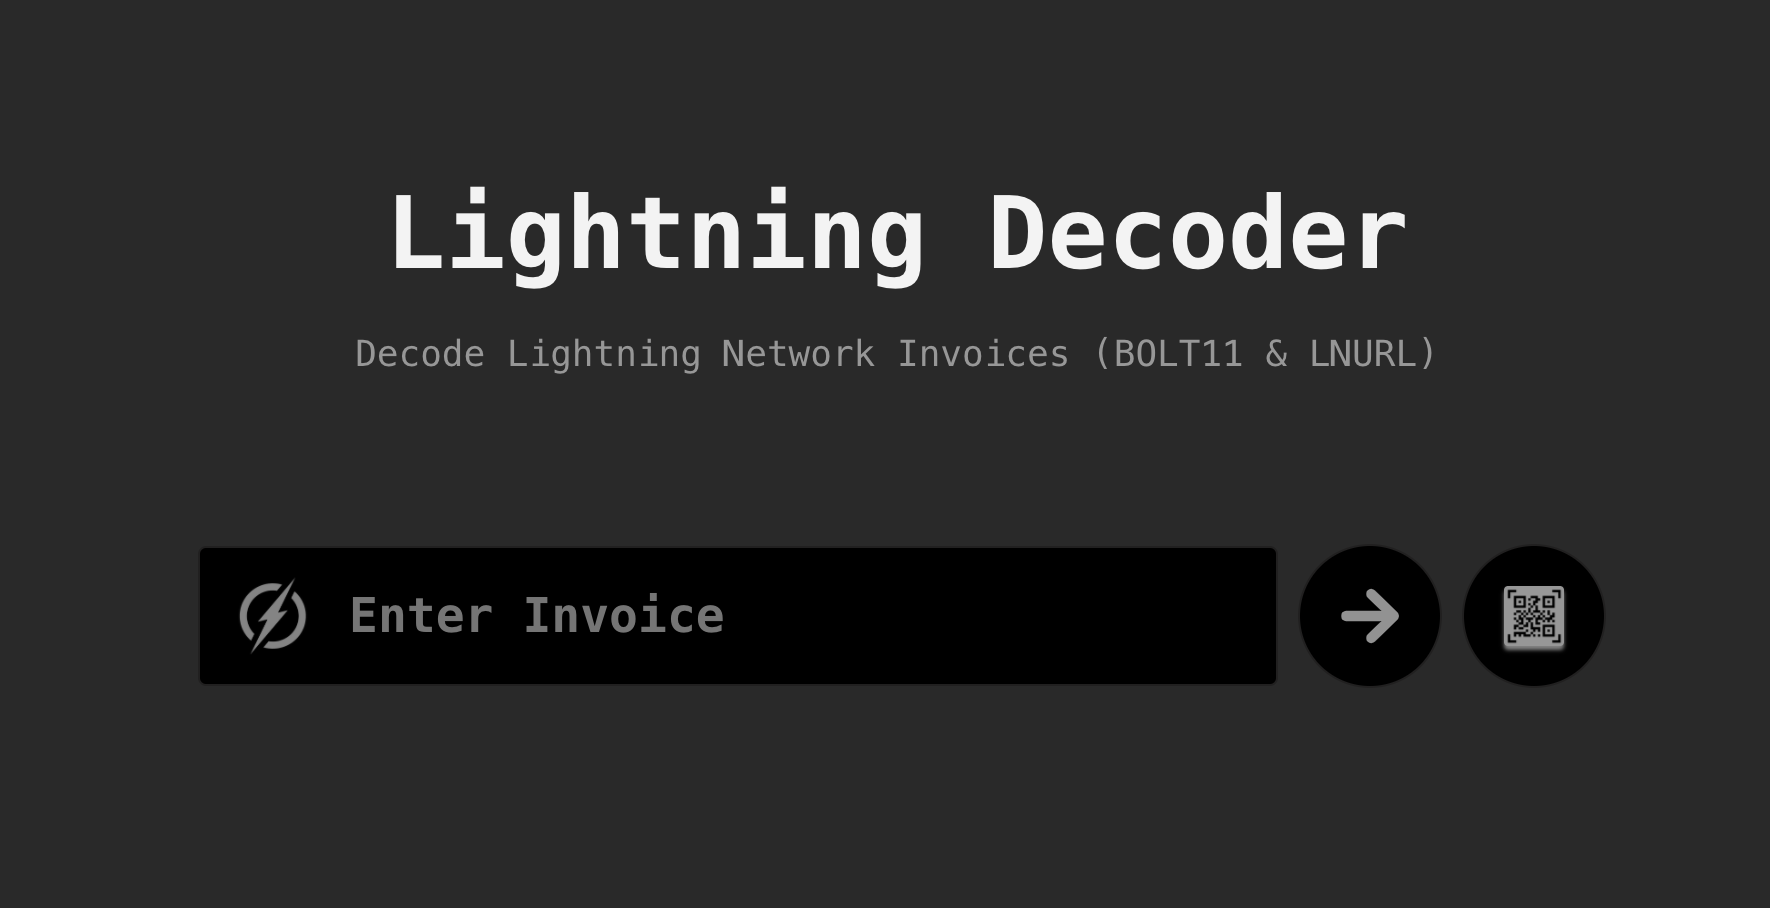 Image of Lightning Decoder